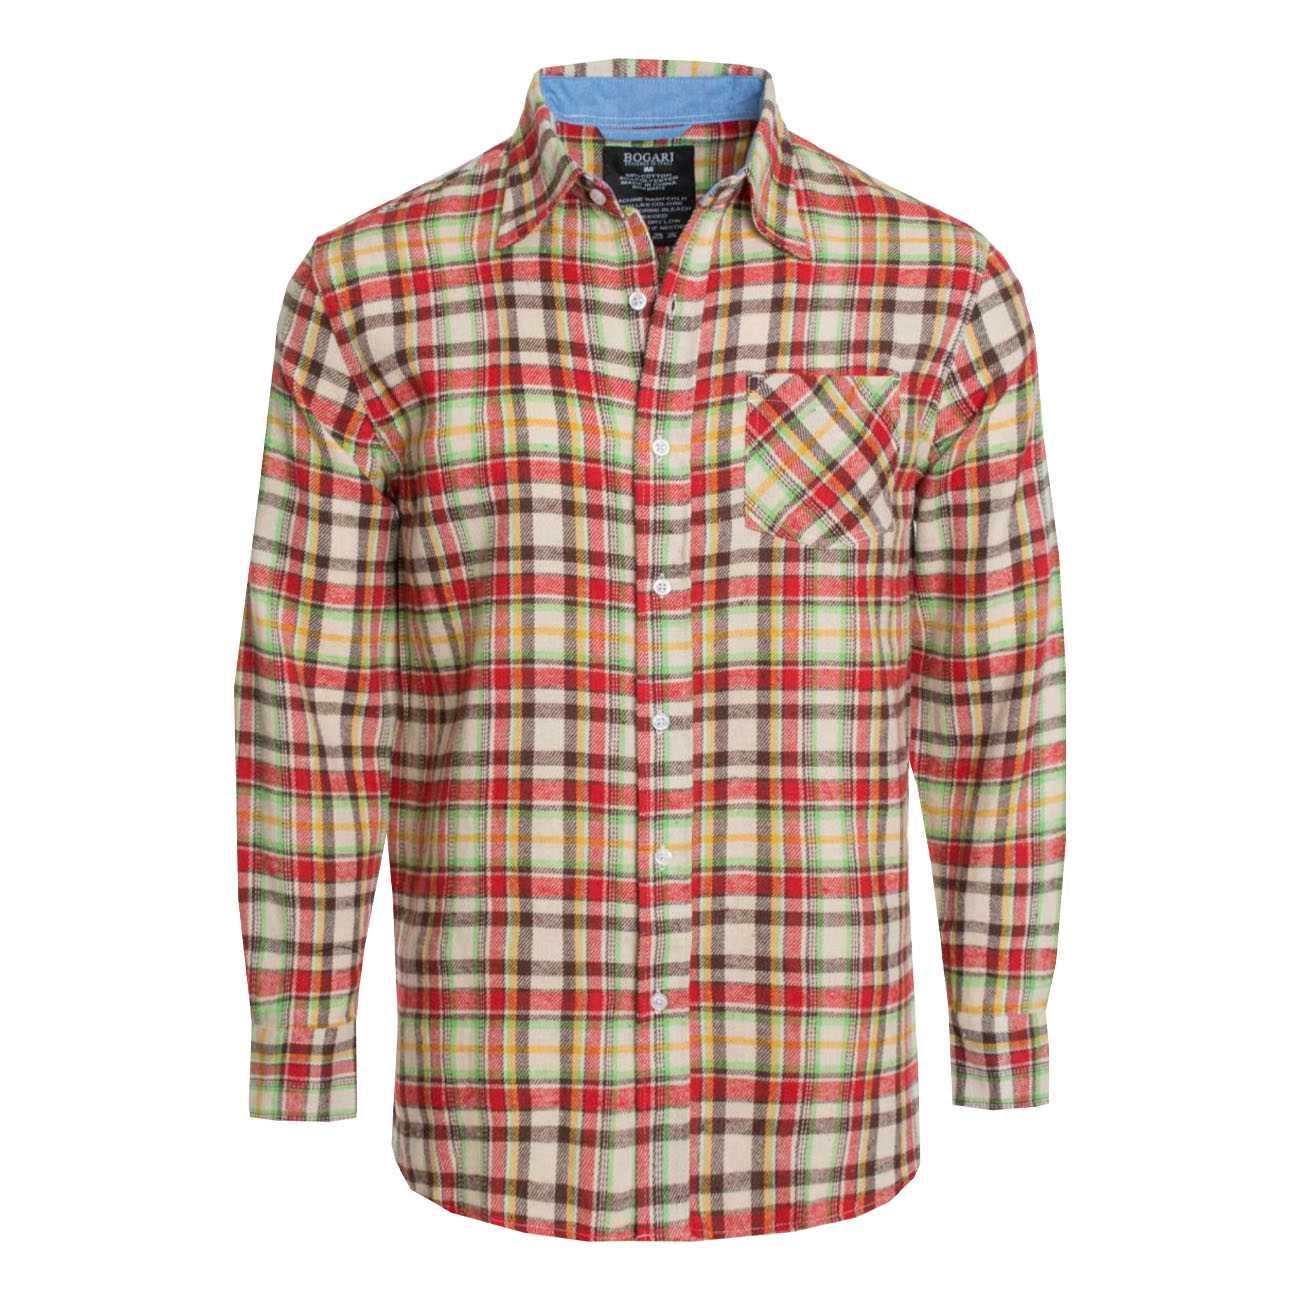 Men's Flannel Shirt Button Down Long Sleeve ZA001 002 003 by  BOGARI .